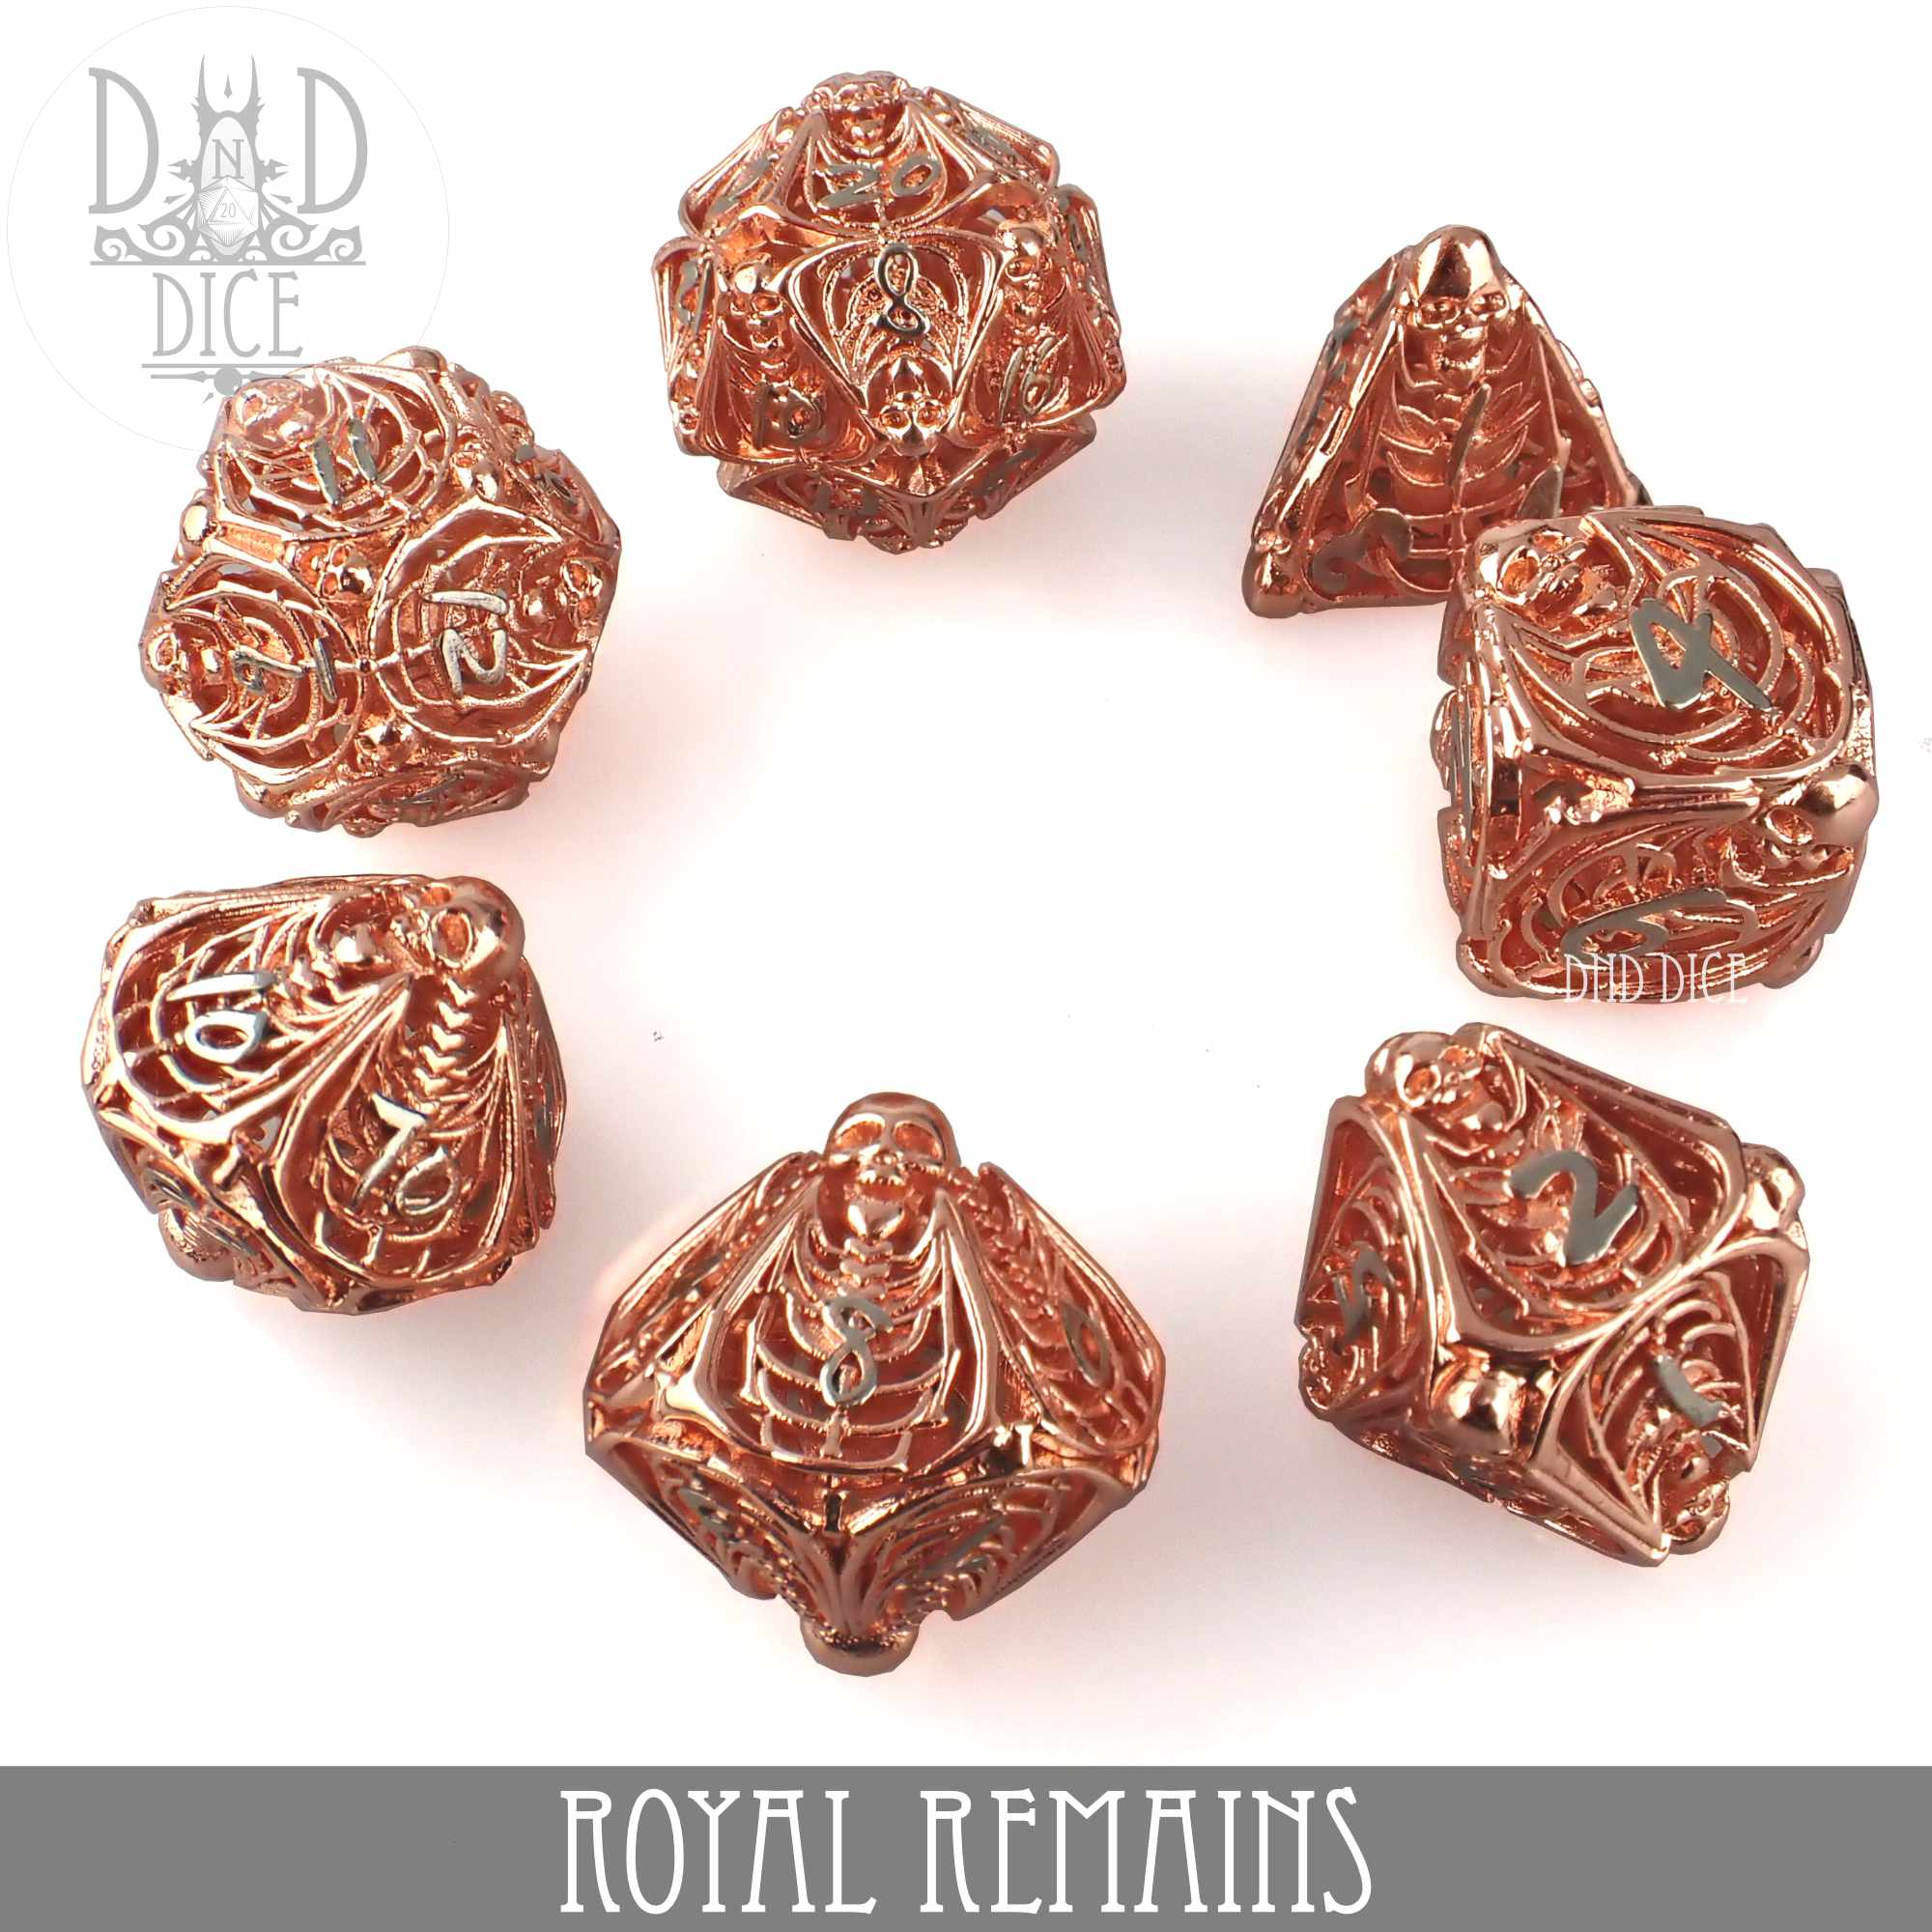 Royal Remains Hollow Metal Dice Set (Gift Box)